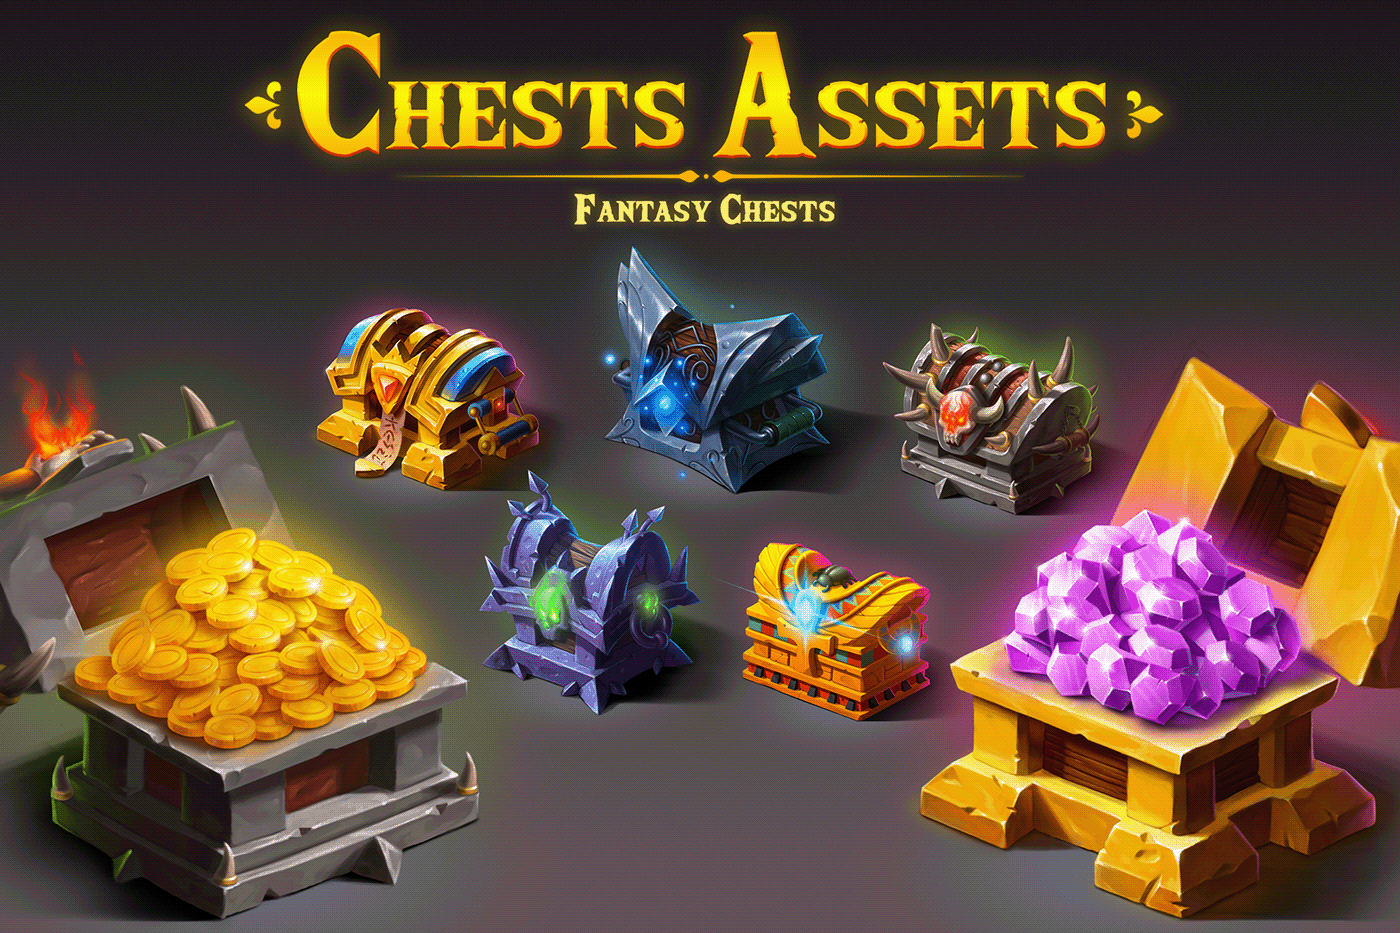 Fantasy chest